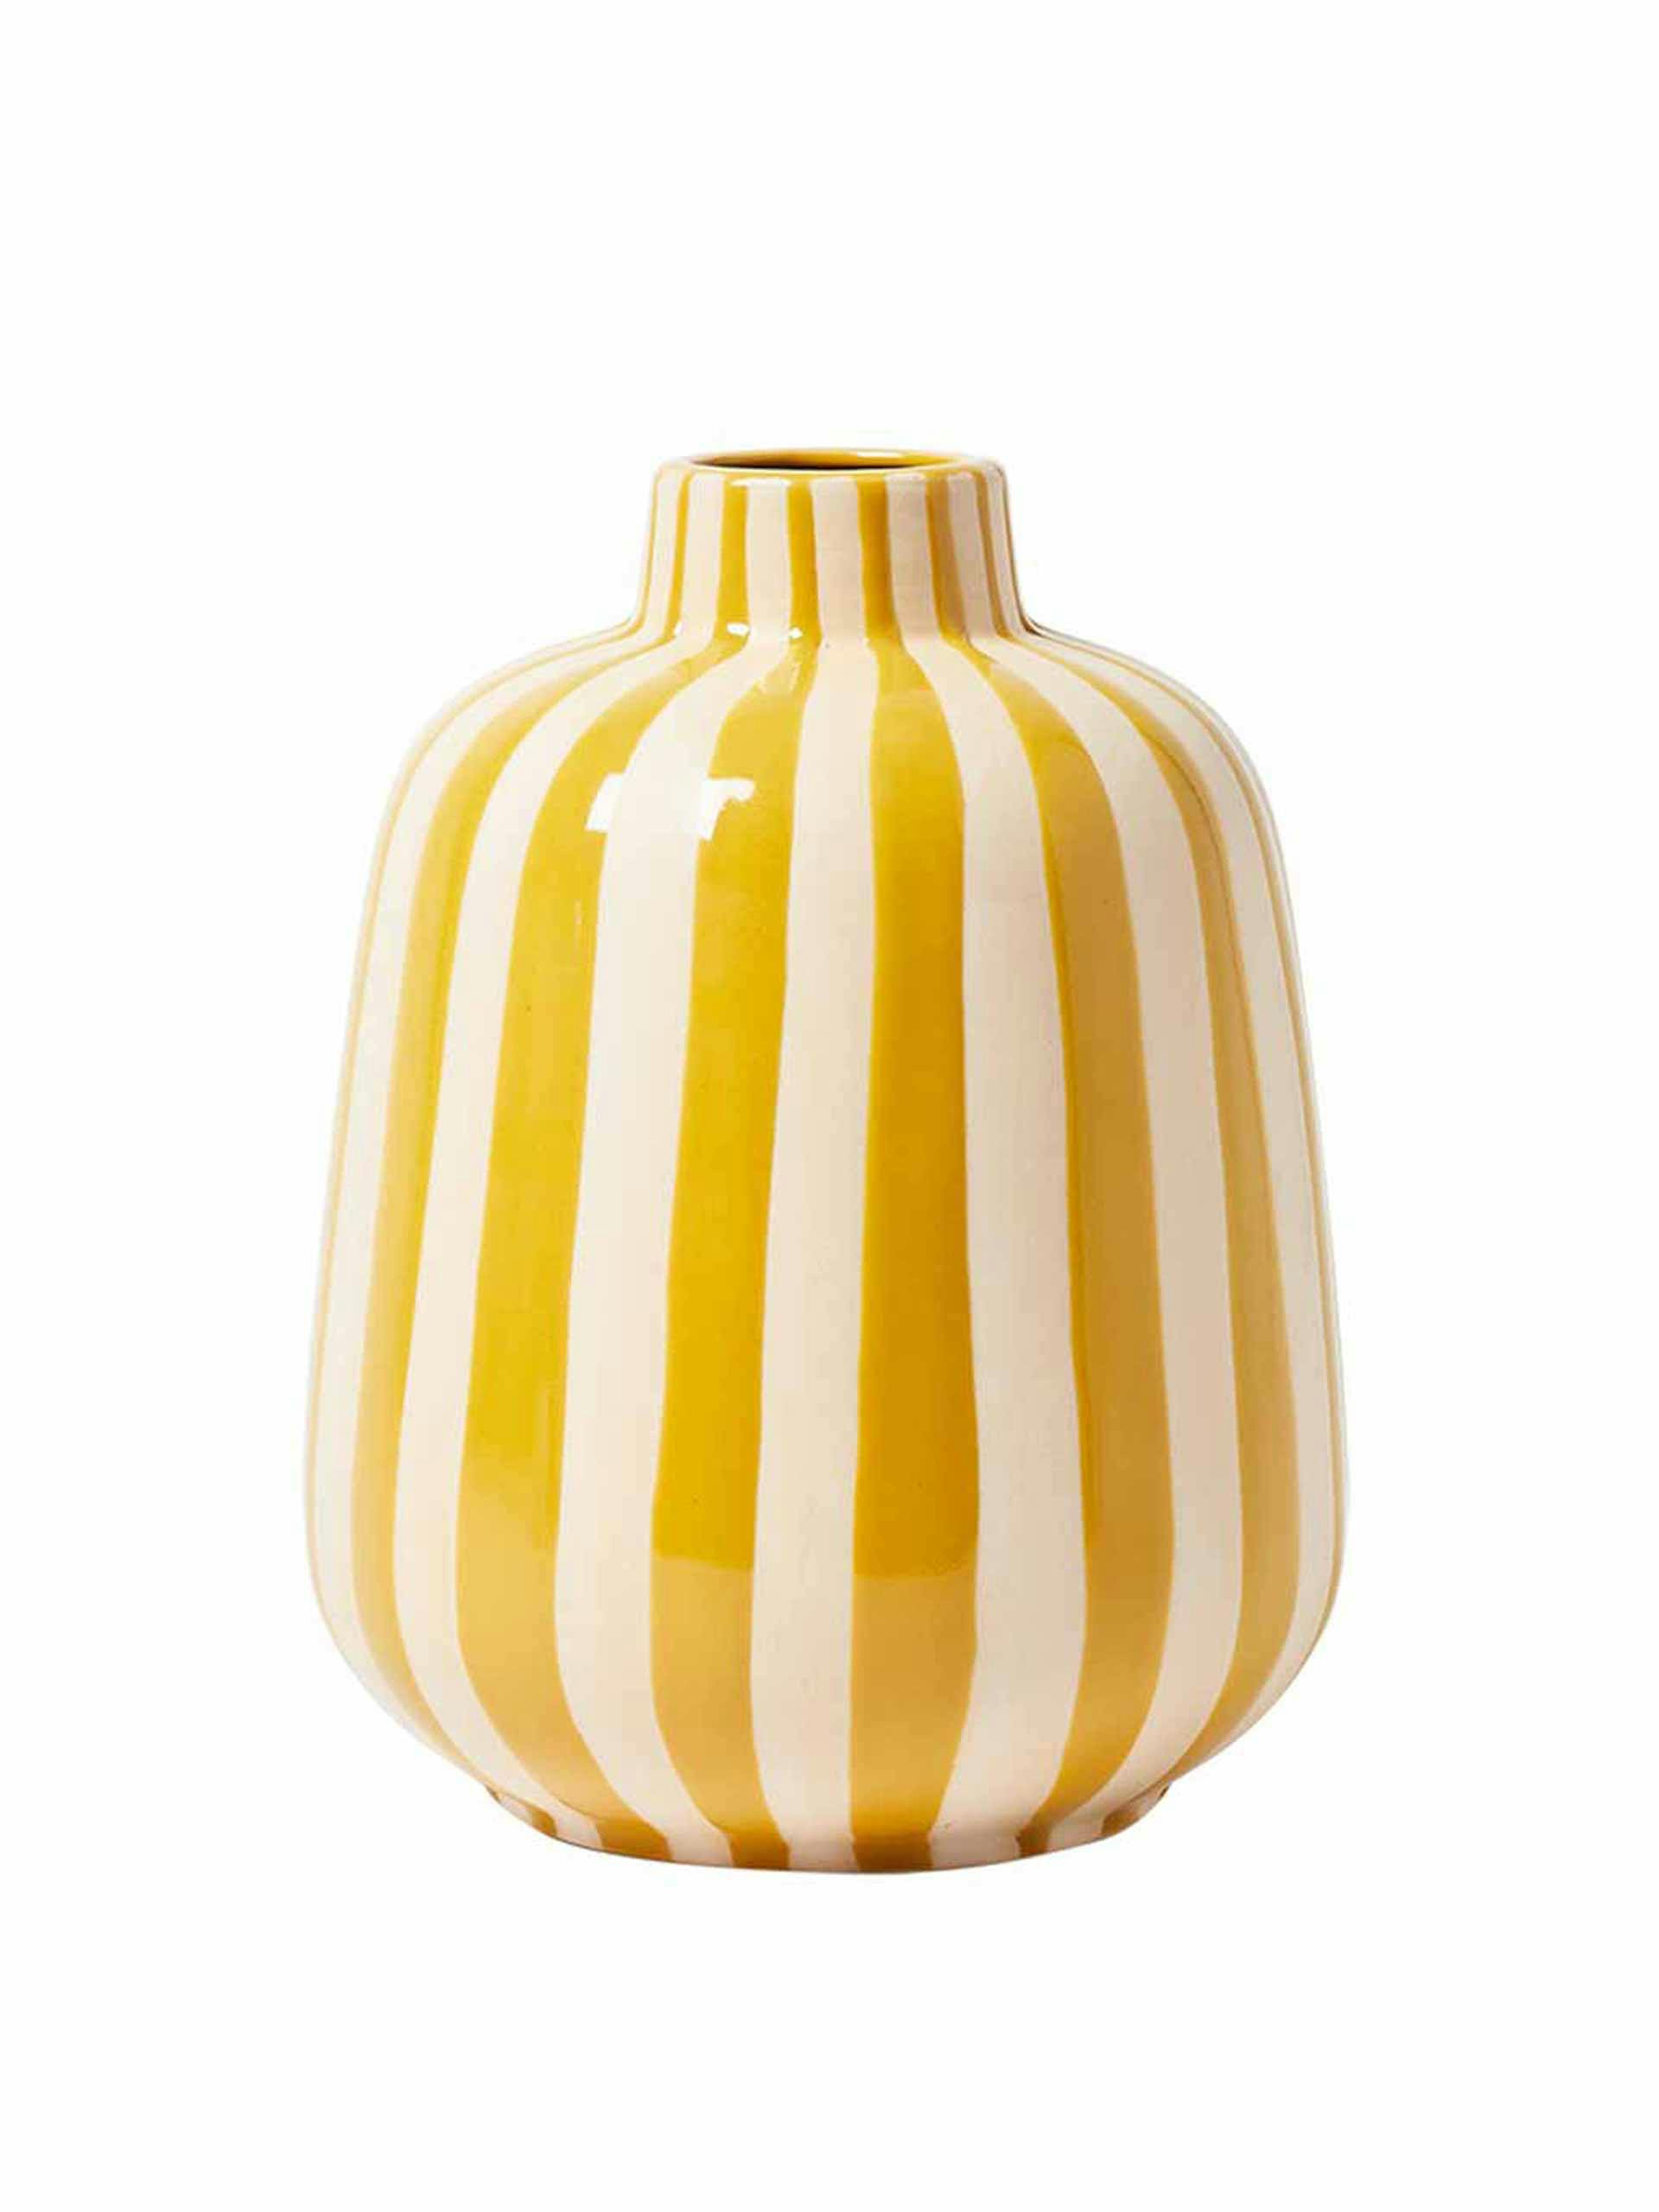 Riviera stripe yellow ceramic vase